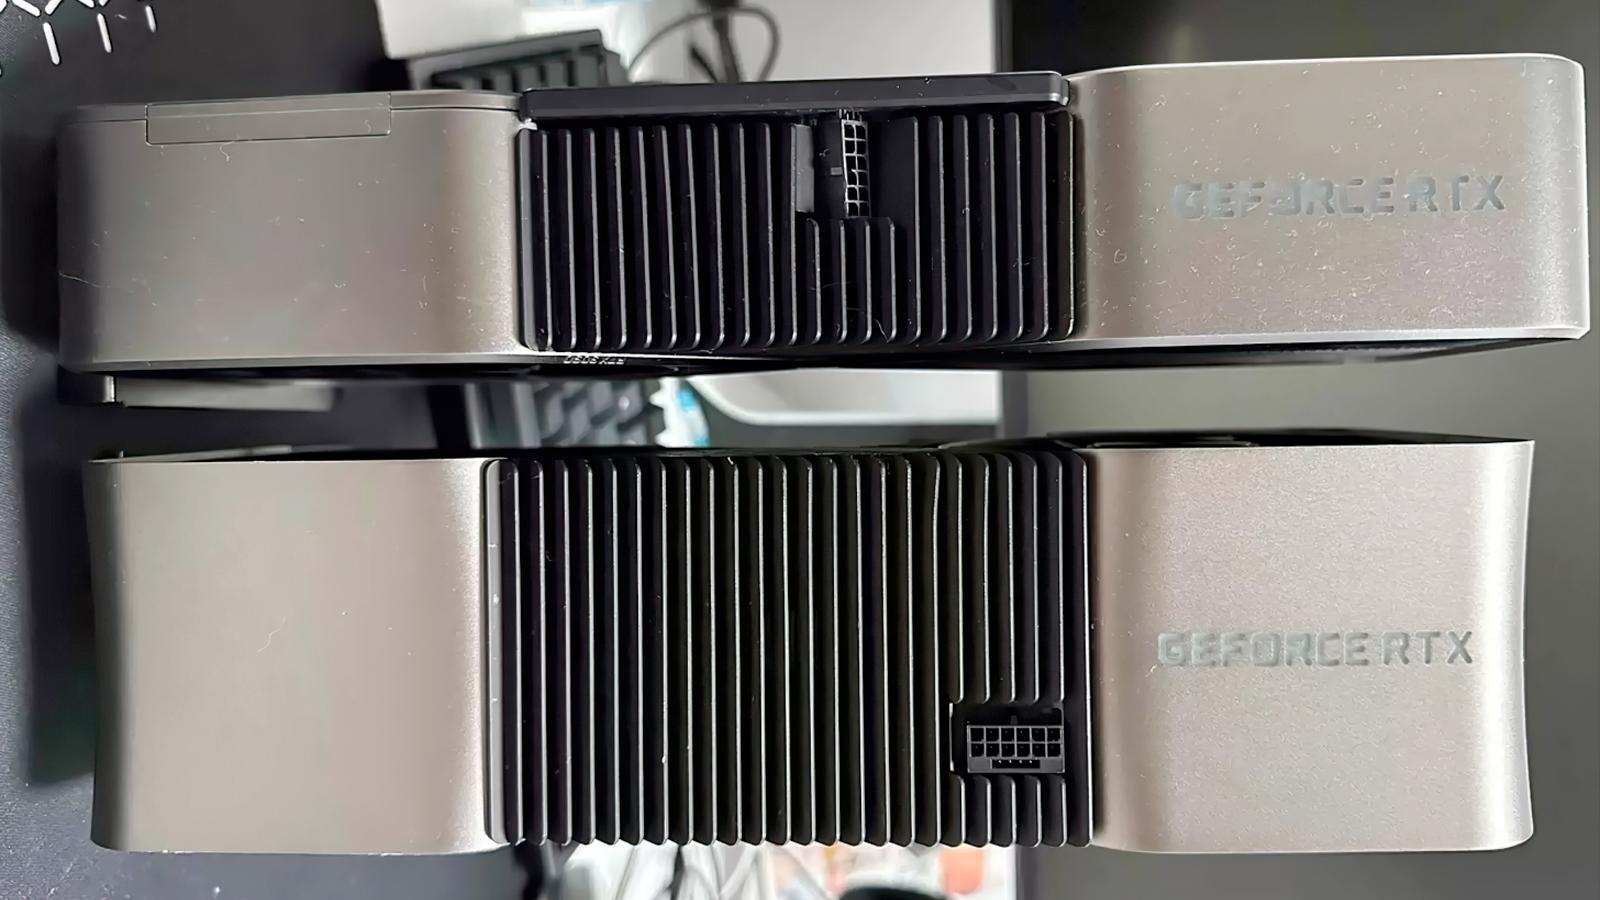 Size comparison of Nvidia GPUs